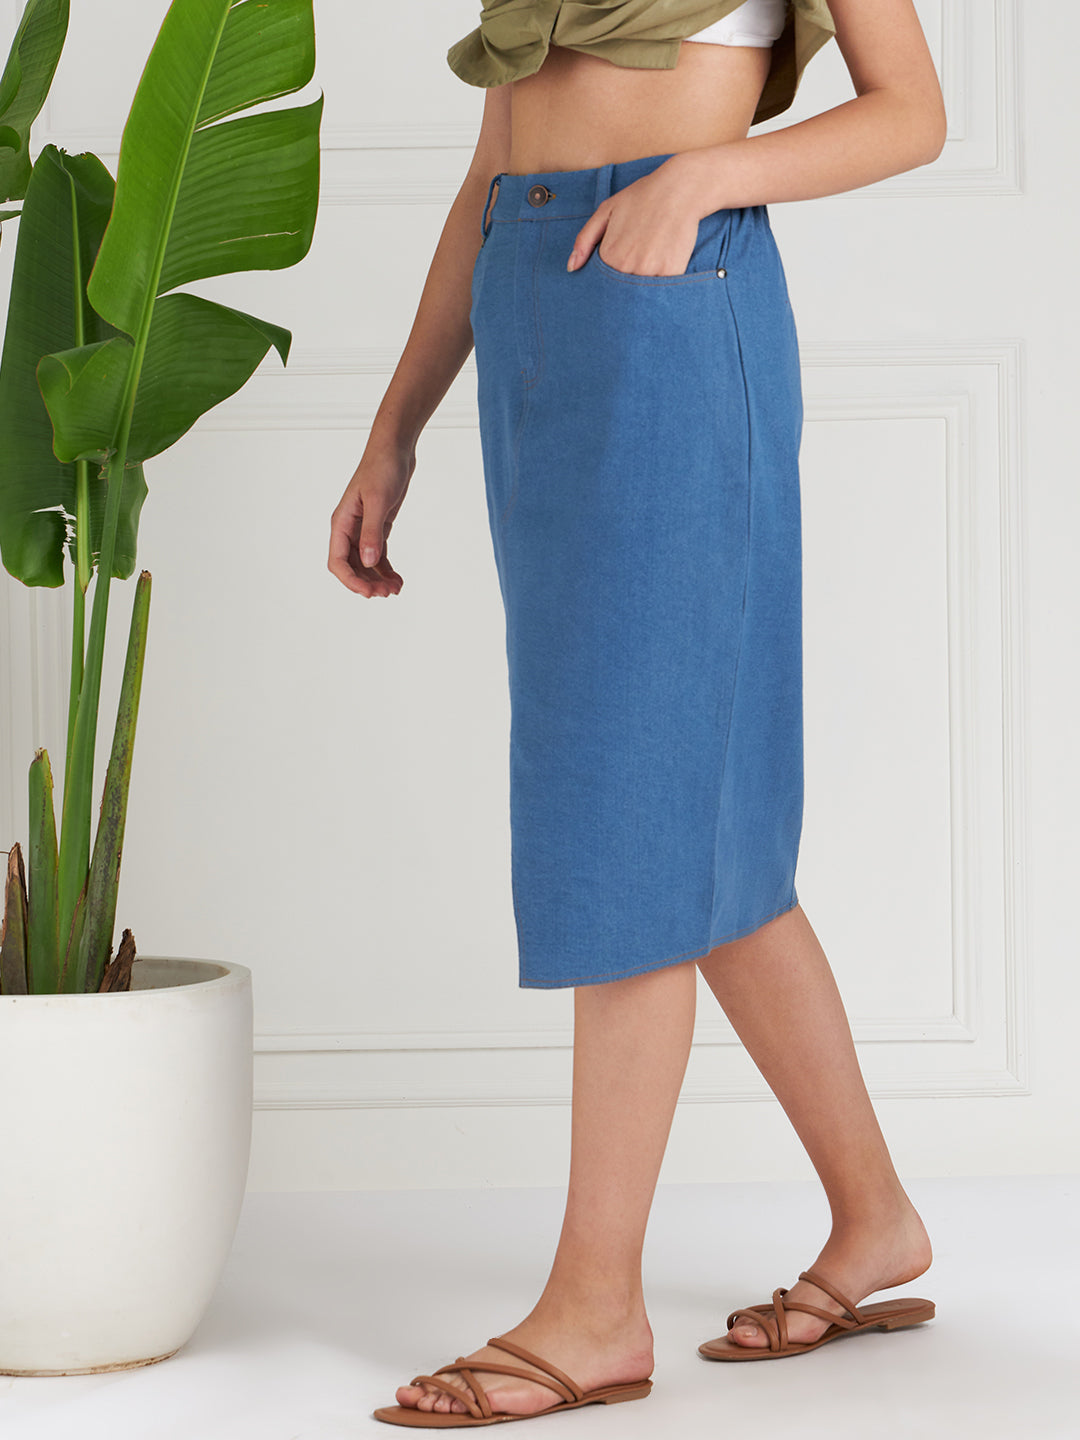 Athena Women Blue Denim Front Slit Knee Length A-Line Skirt - Athena Lifestyle